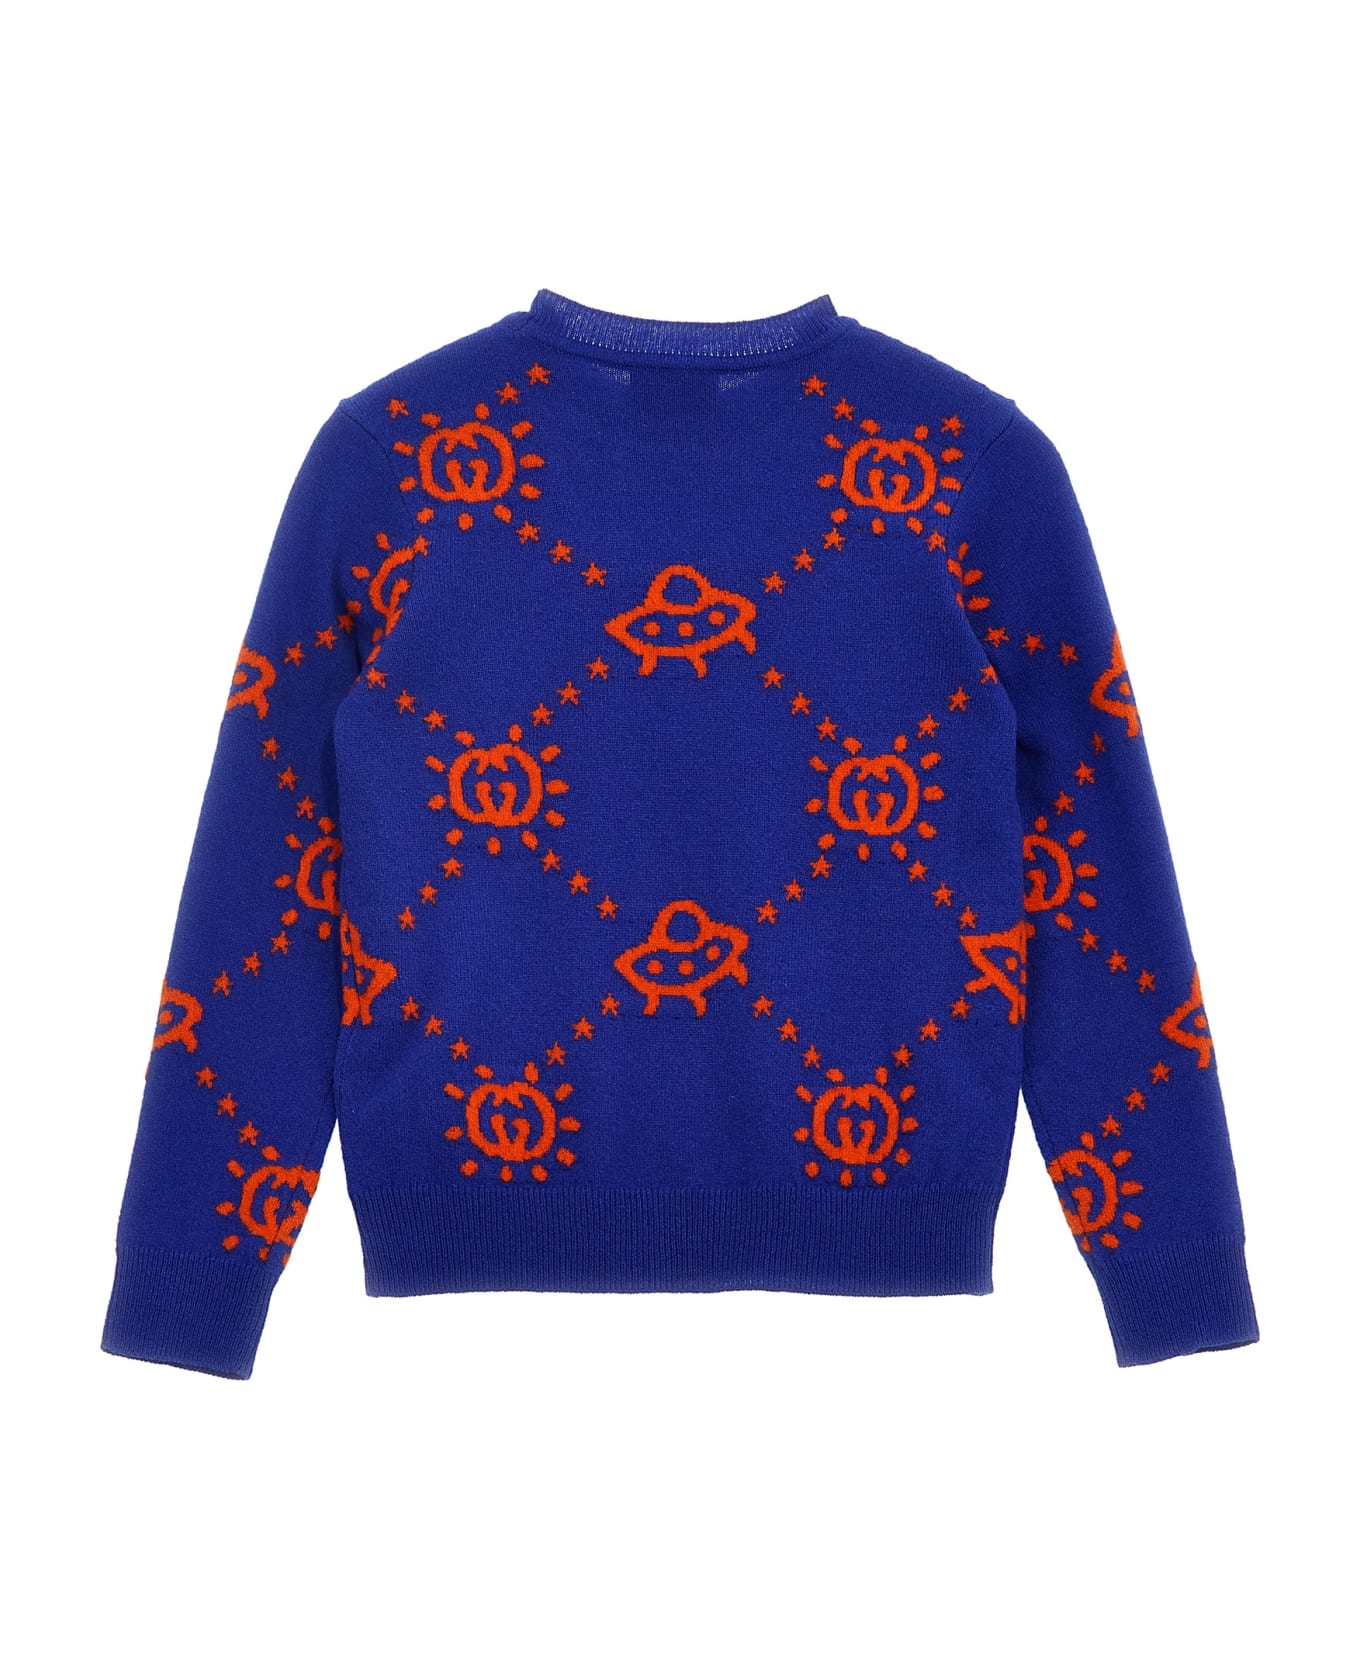 Gucci 'ufo' Sweater - NAVY